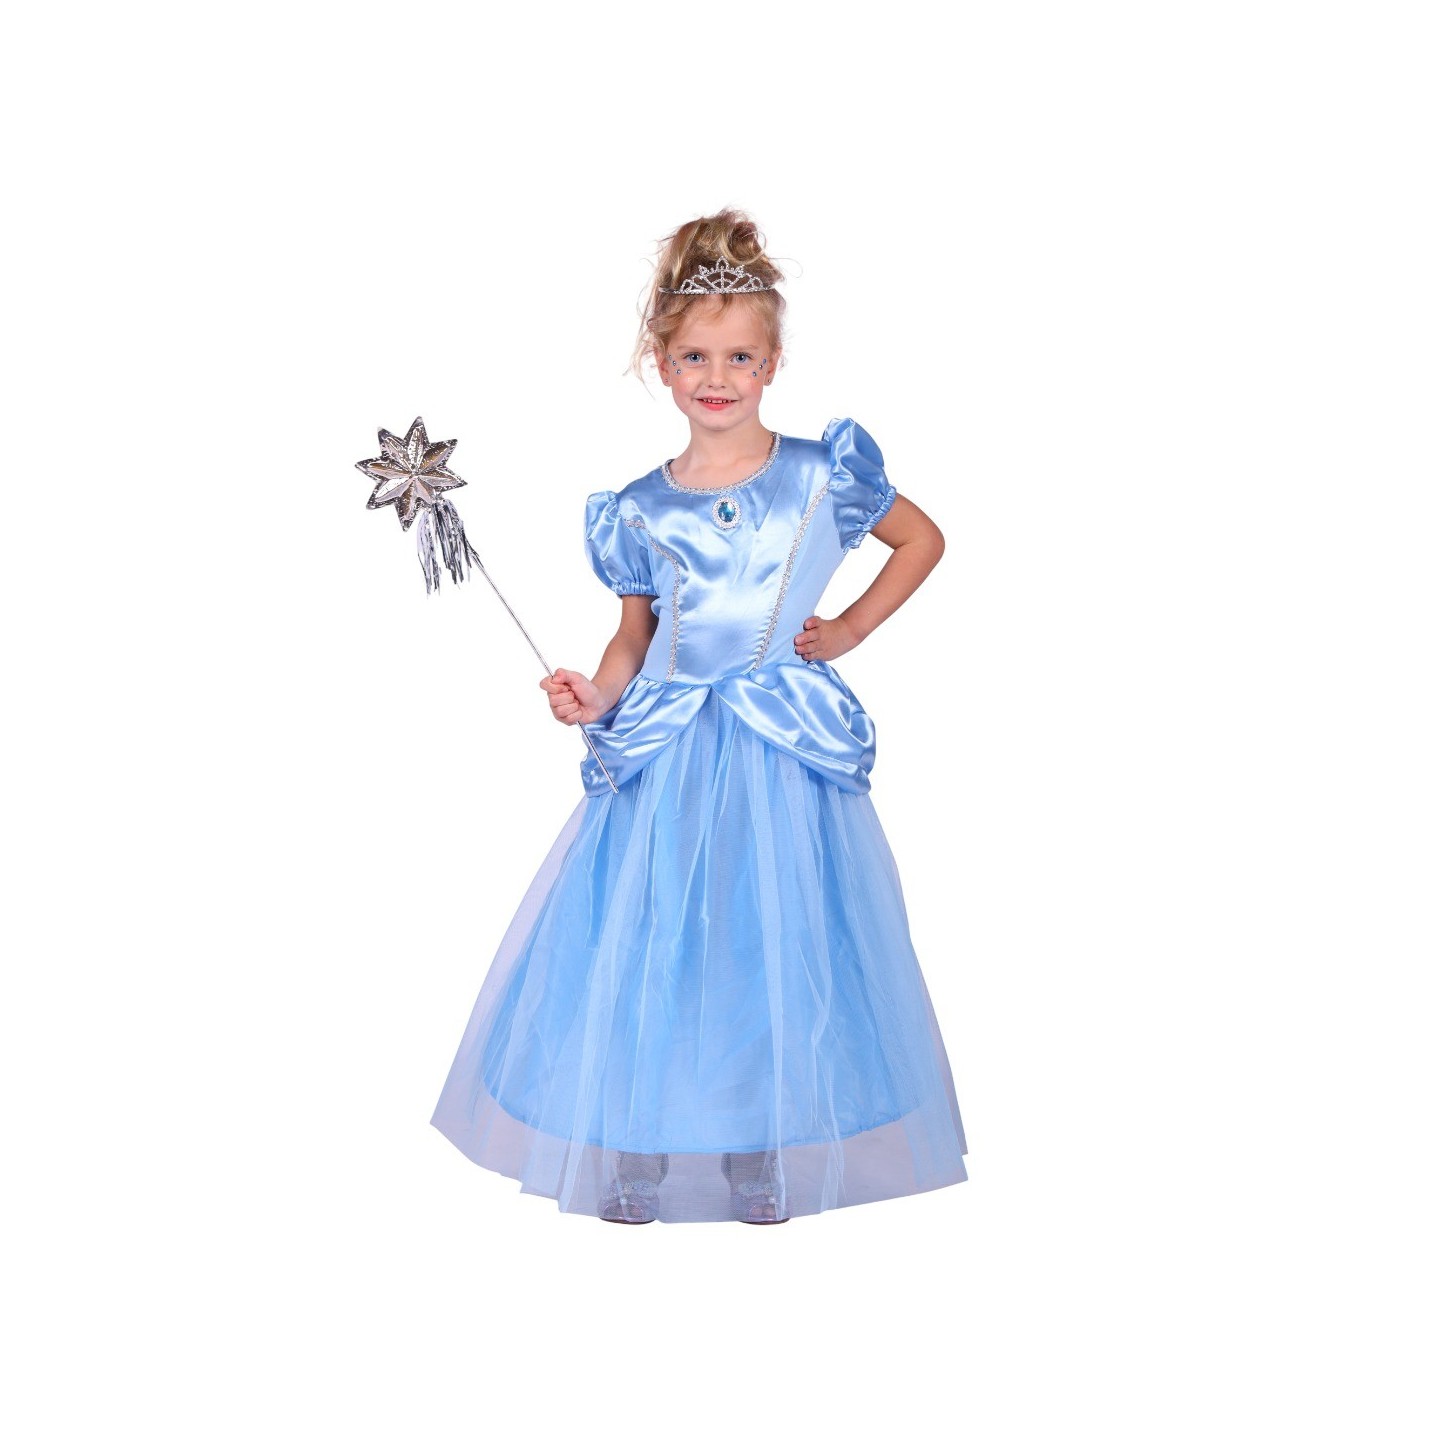 Prinsessenjurk kind prinsessenkleed blauw prinsessen verkleedkleding